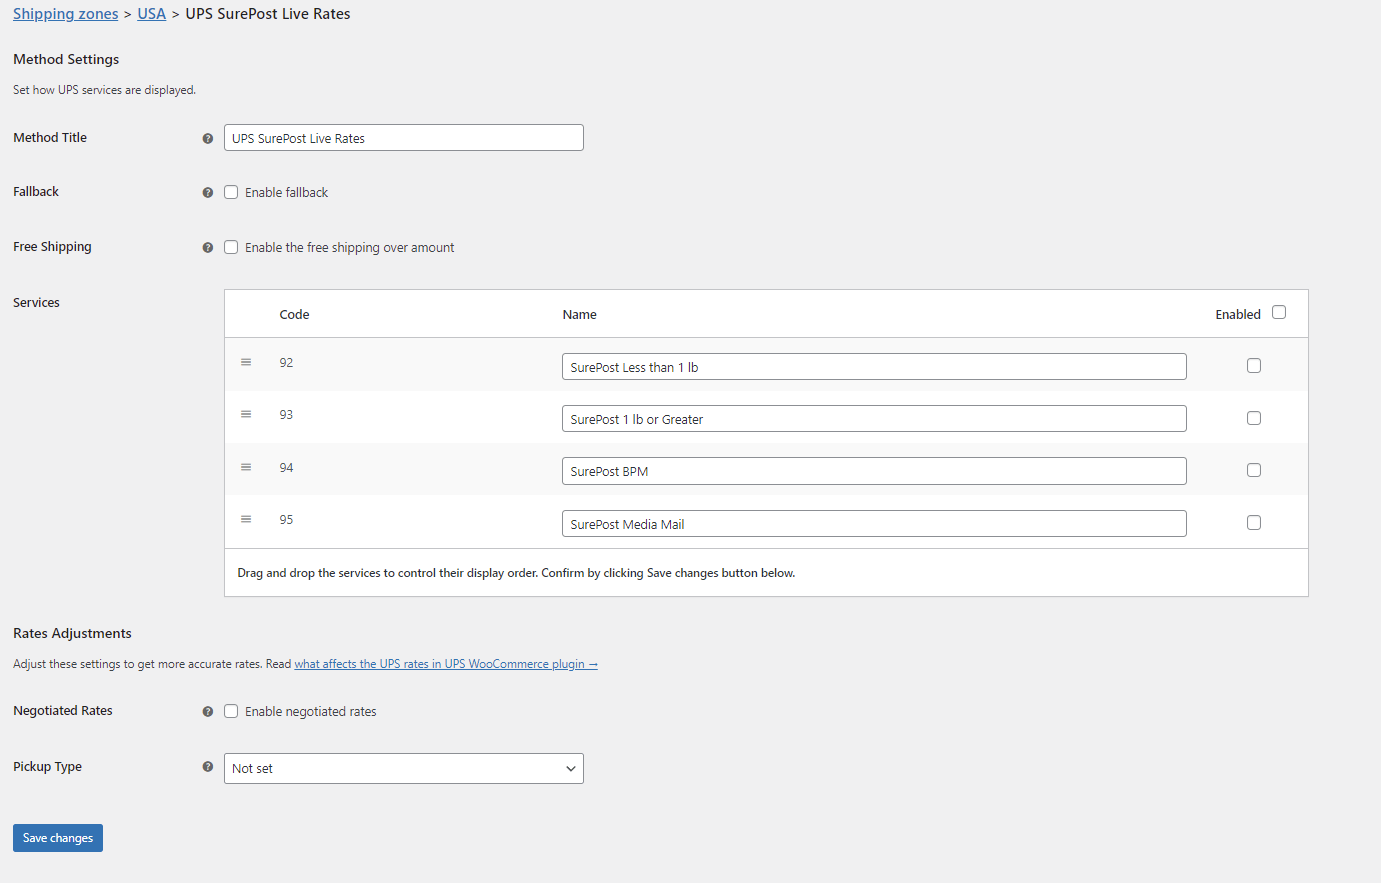 UPS SurePost Live Rates shipping method settings